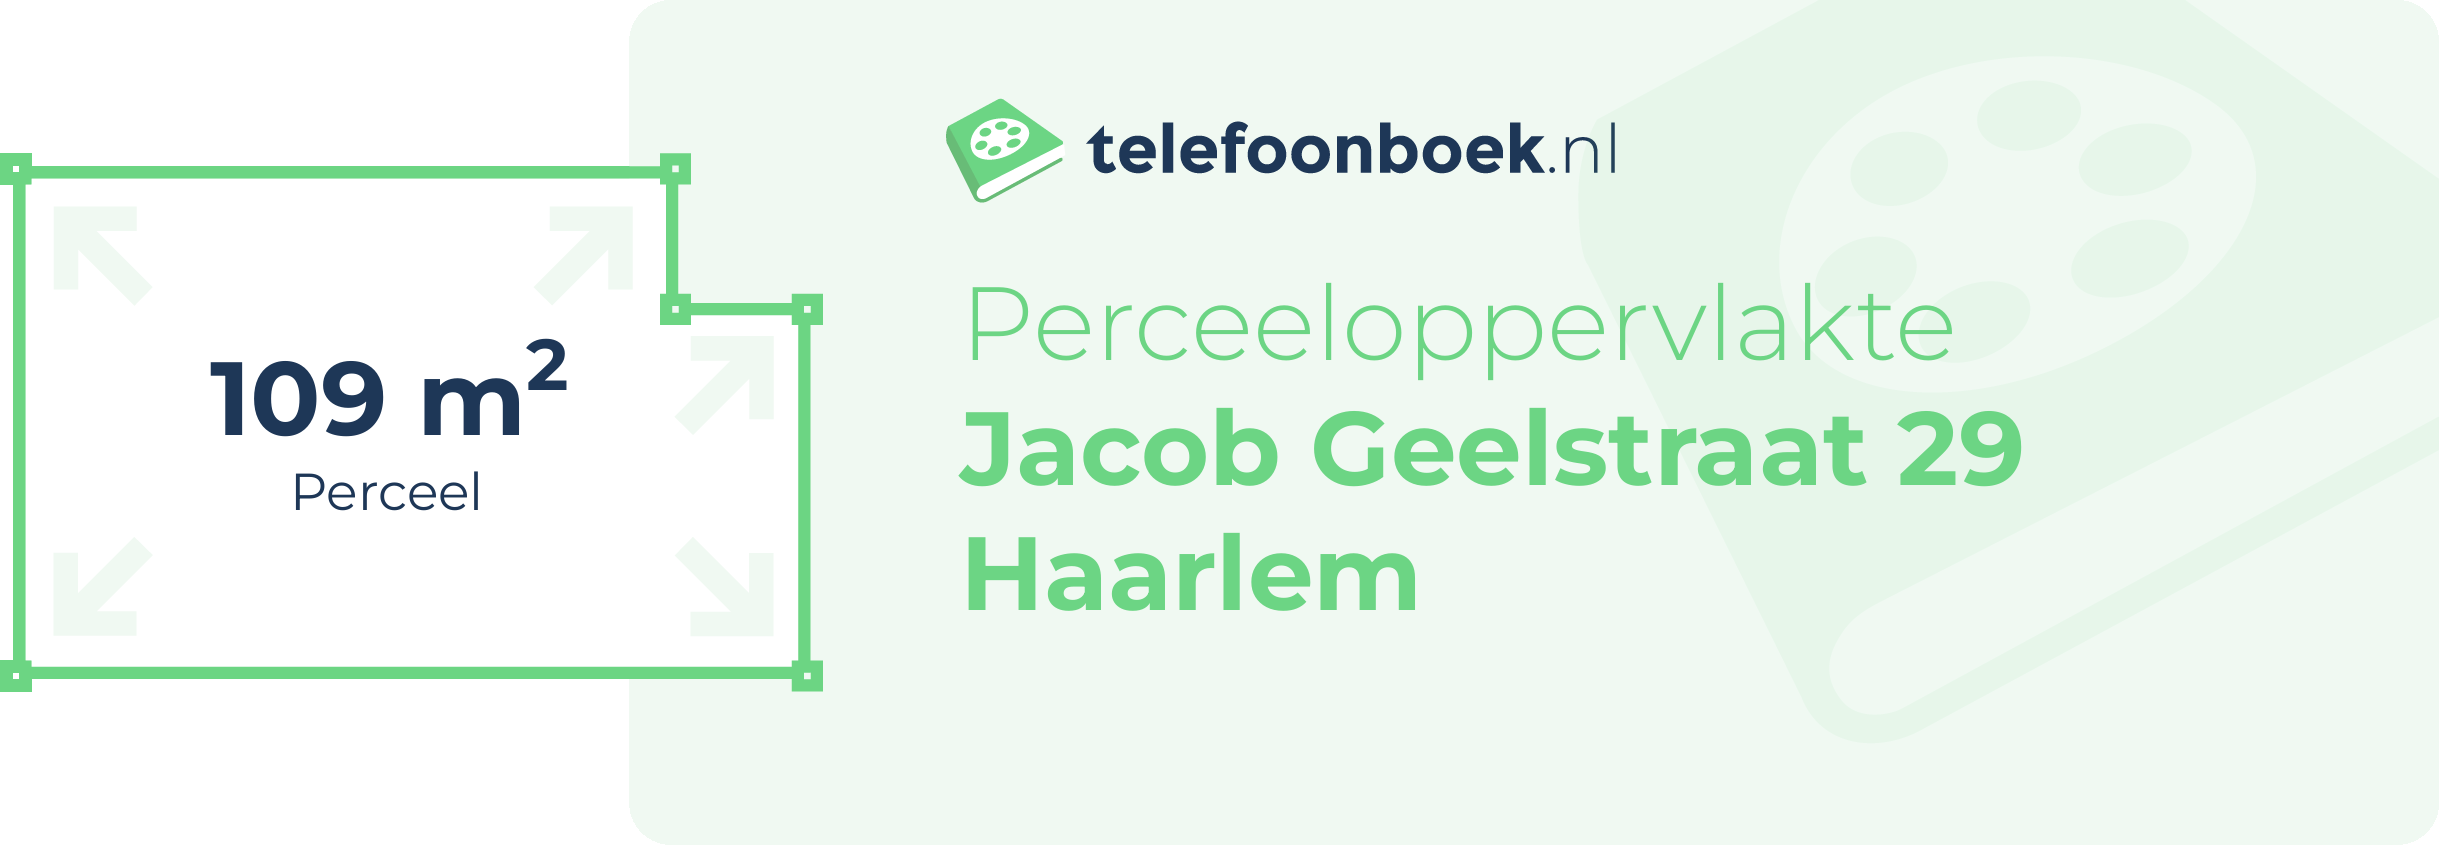 Perceeloppervlakte Jacob Geelstraat 29 Haarlem